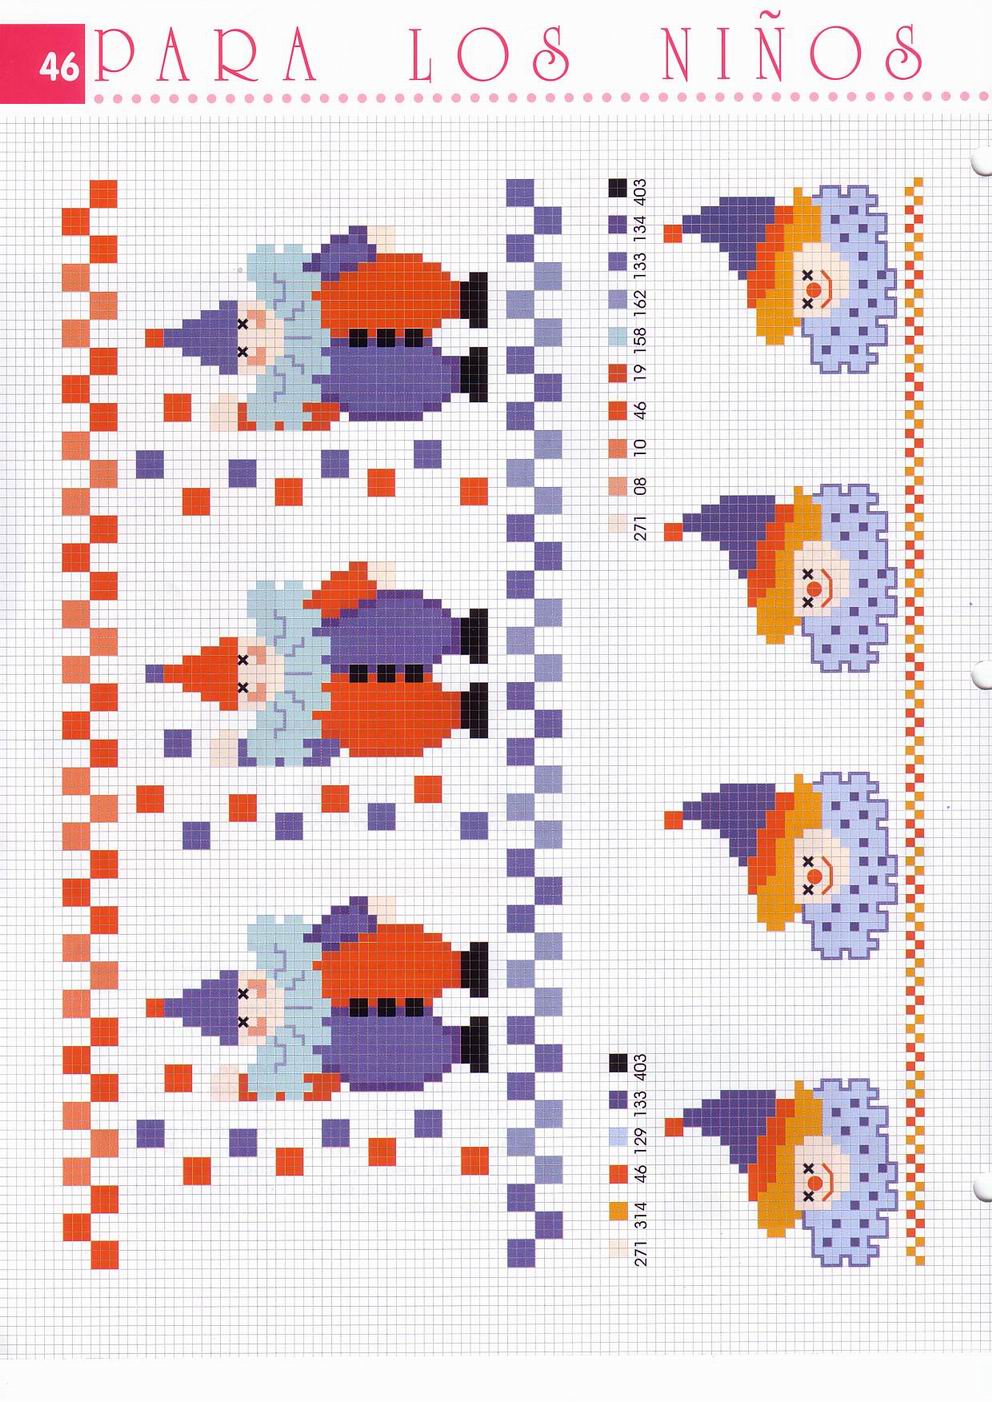 Cross stitch pattern with baby clowns